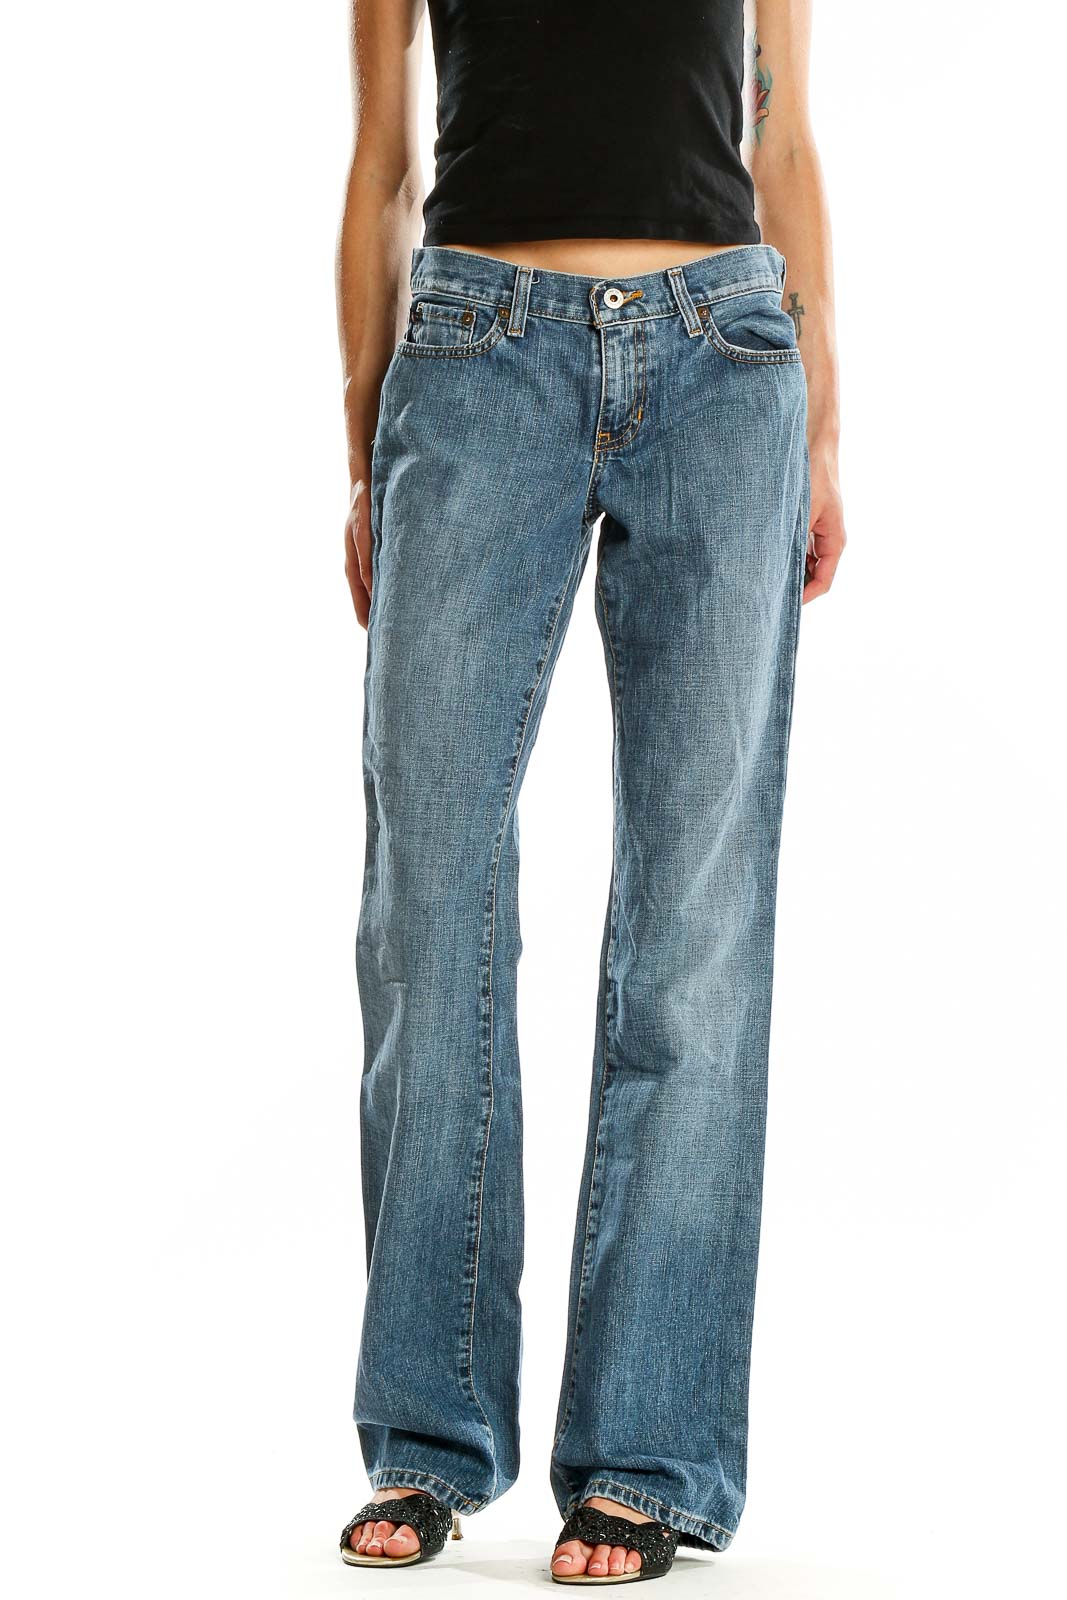 Blue Medium Wash Jeans Front